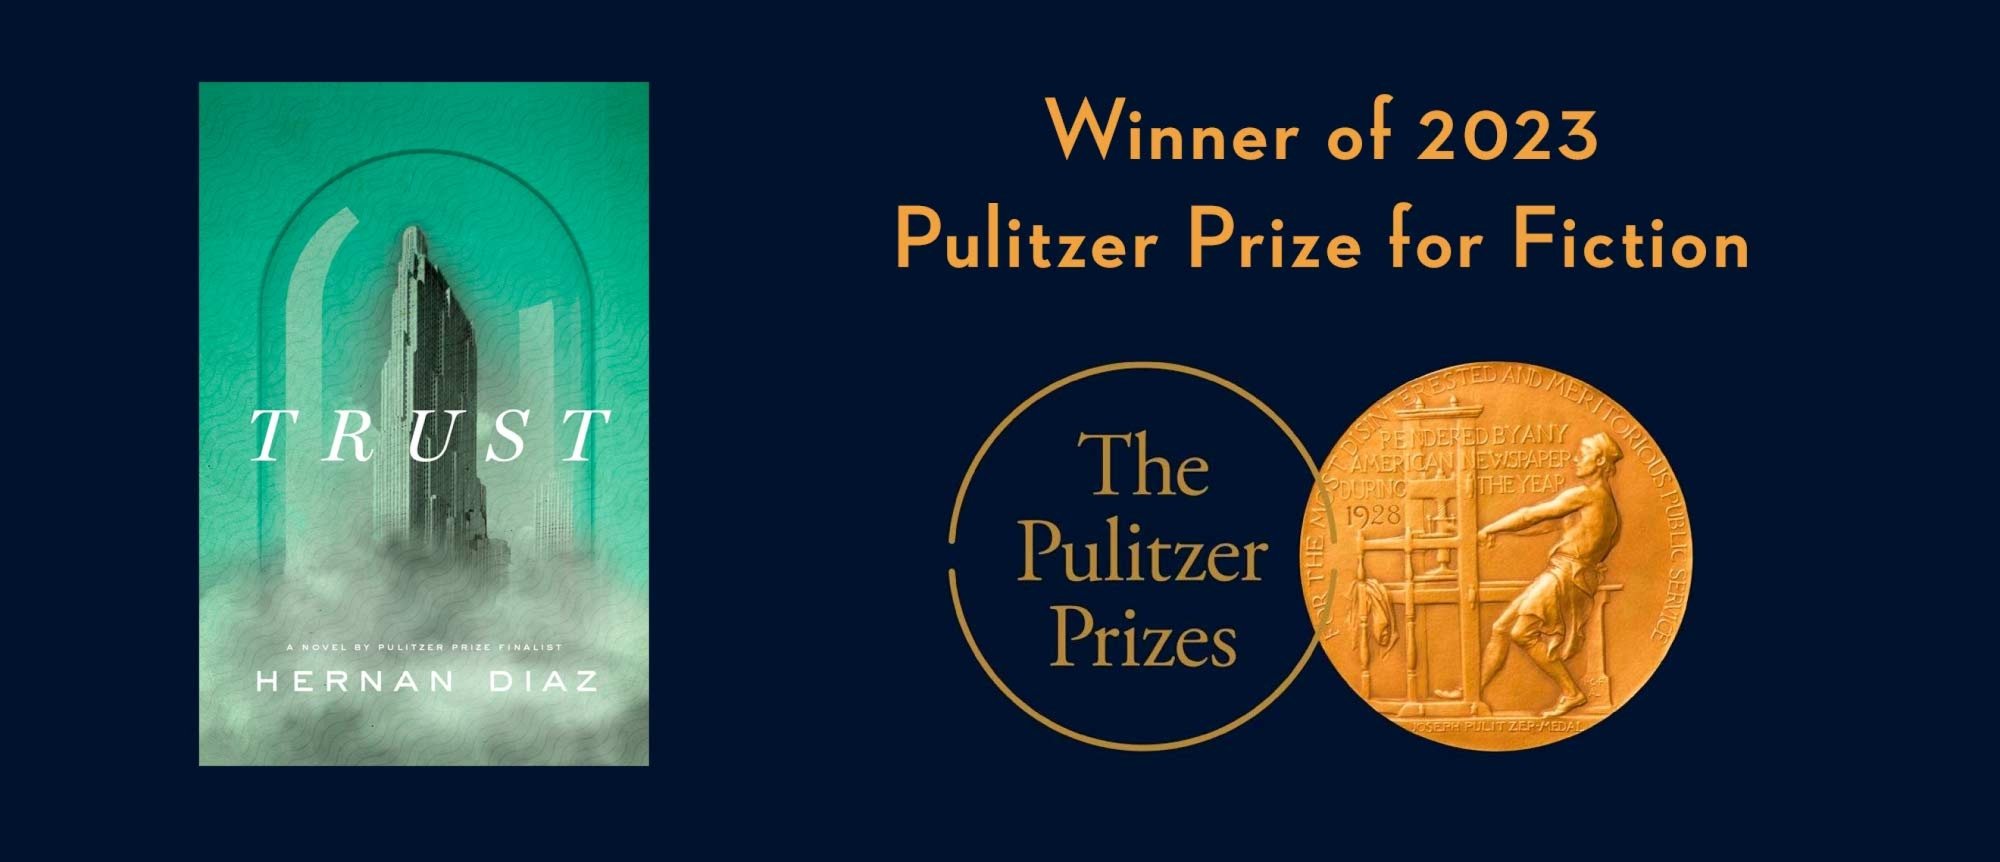 The 2023 Pulitzer Prize Winner in Fiction - Hernan Diaz